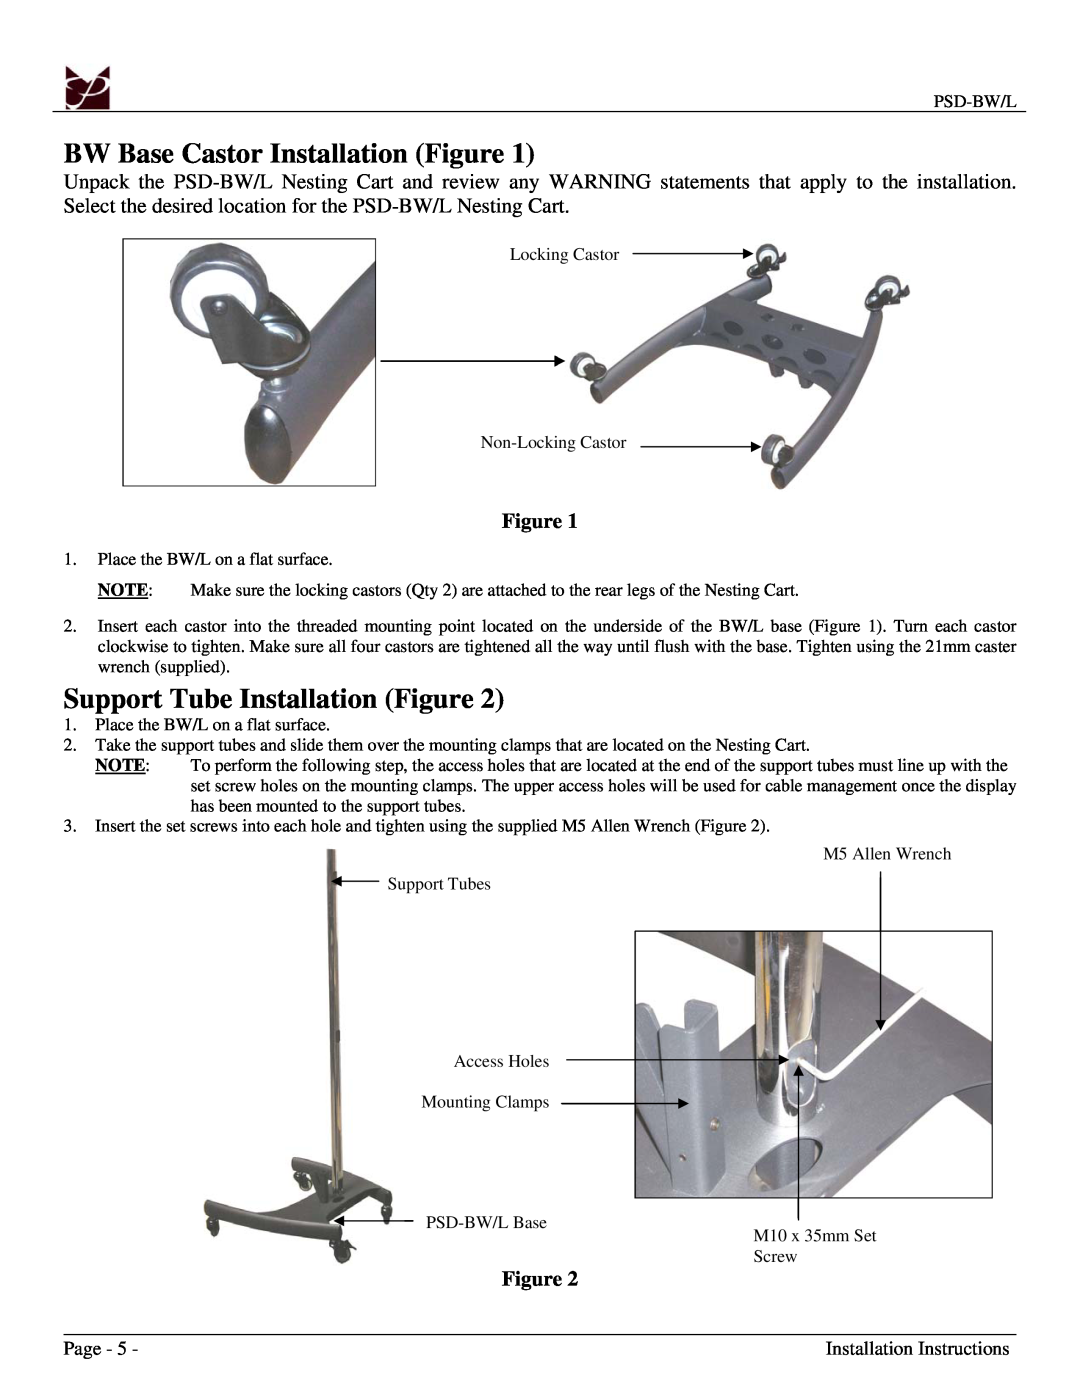 Premier Mounts PSD-BWL installation manual BW Base Castor Installation Figure, Support Tube Installation Figure, Page 